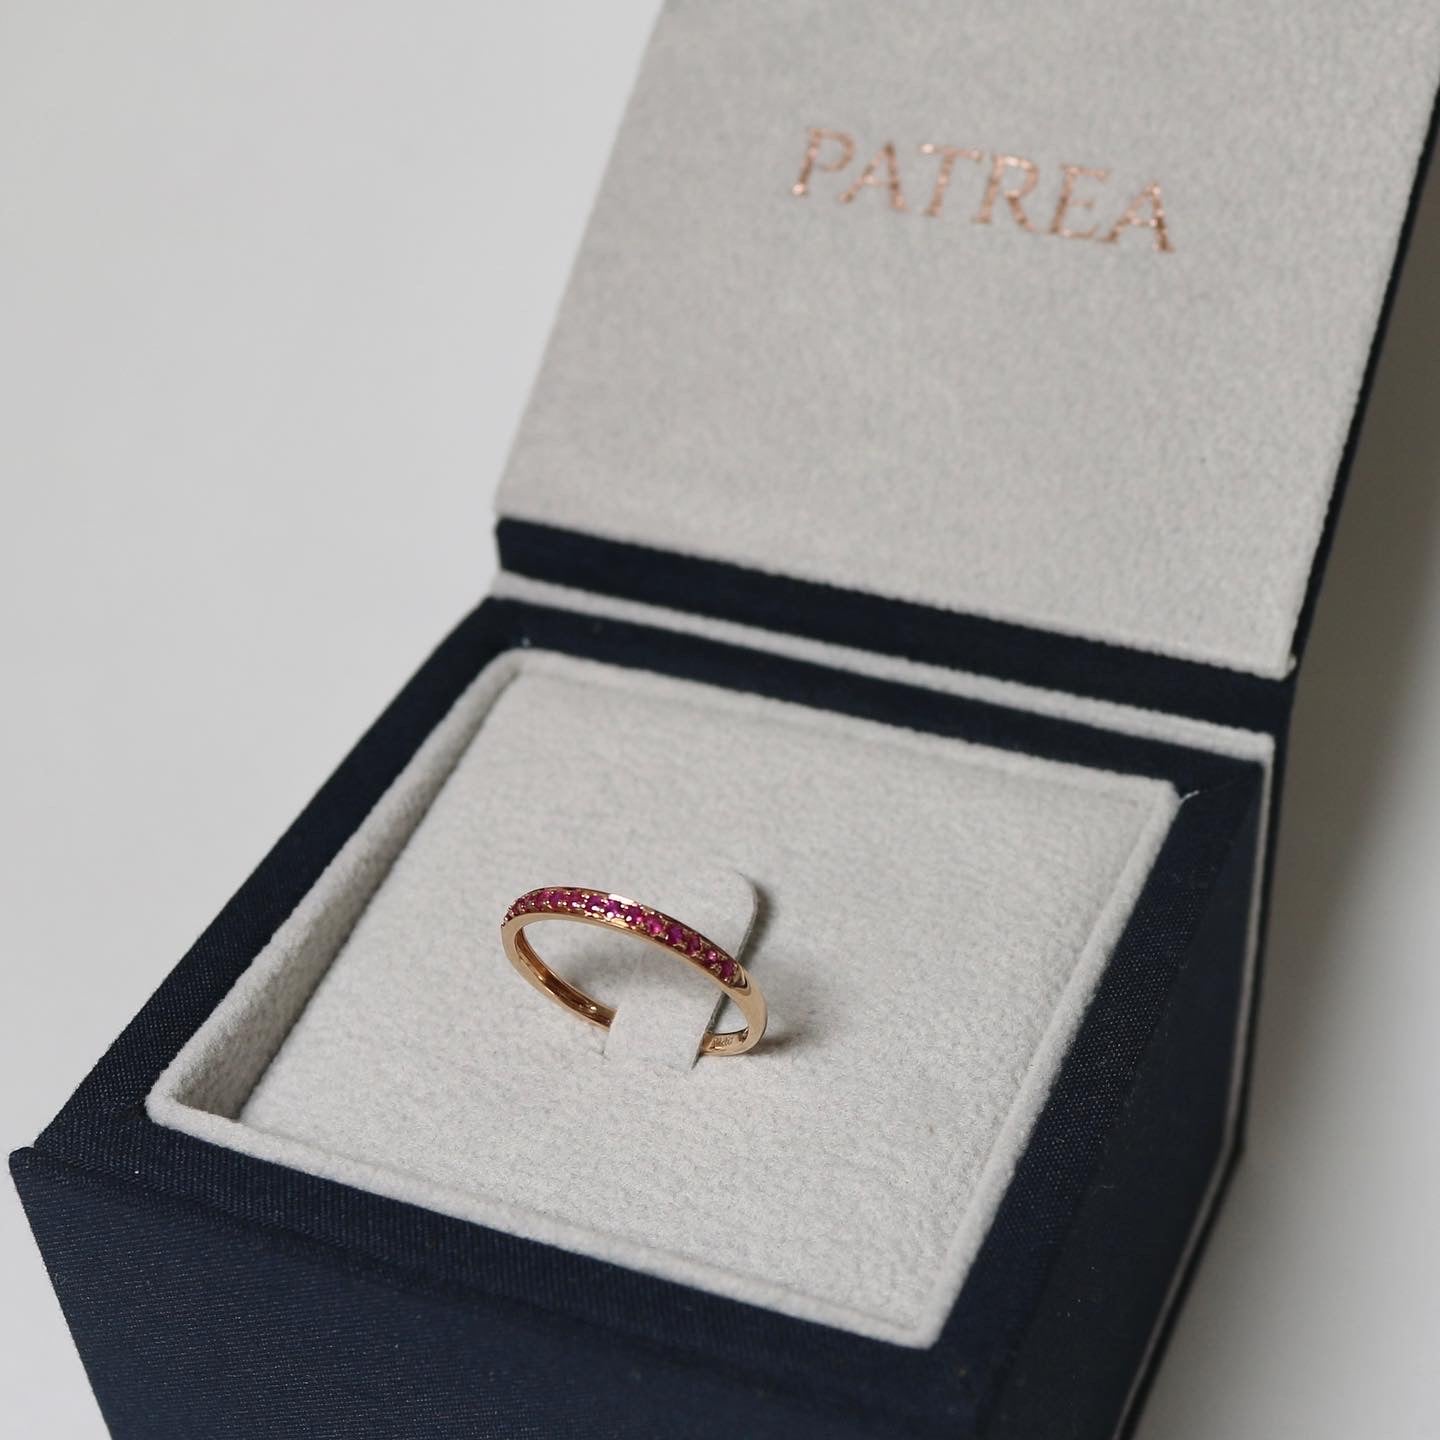 18k玫瑰金半圈紅寶石線戒在包裝盒內 18k Rose Gold Ruby Half Eternity Ring Band in gift packaging